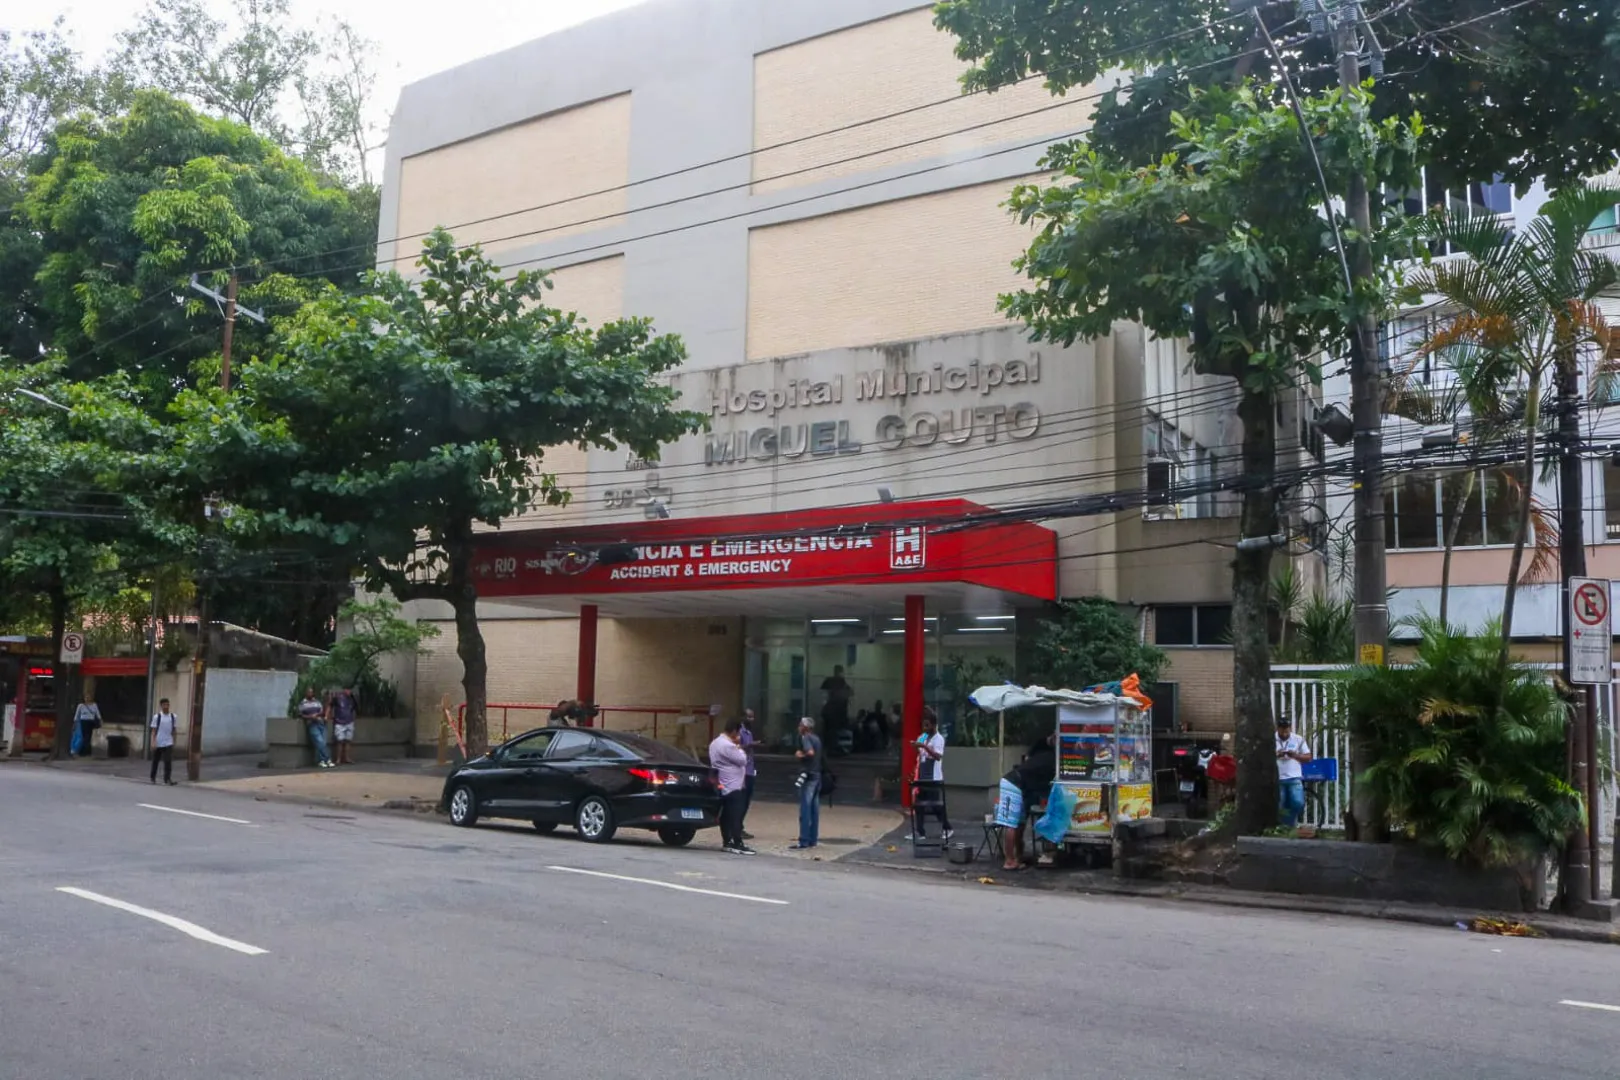 Fachada Hospital Municipal Miguel Couto